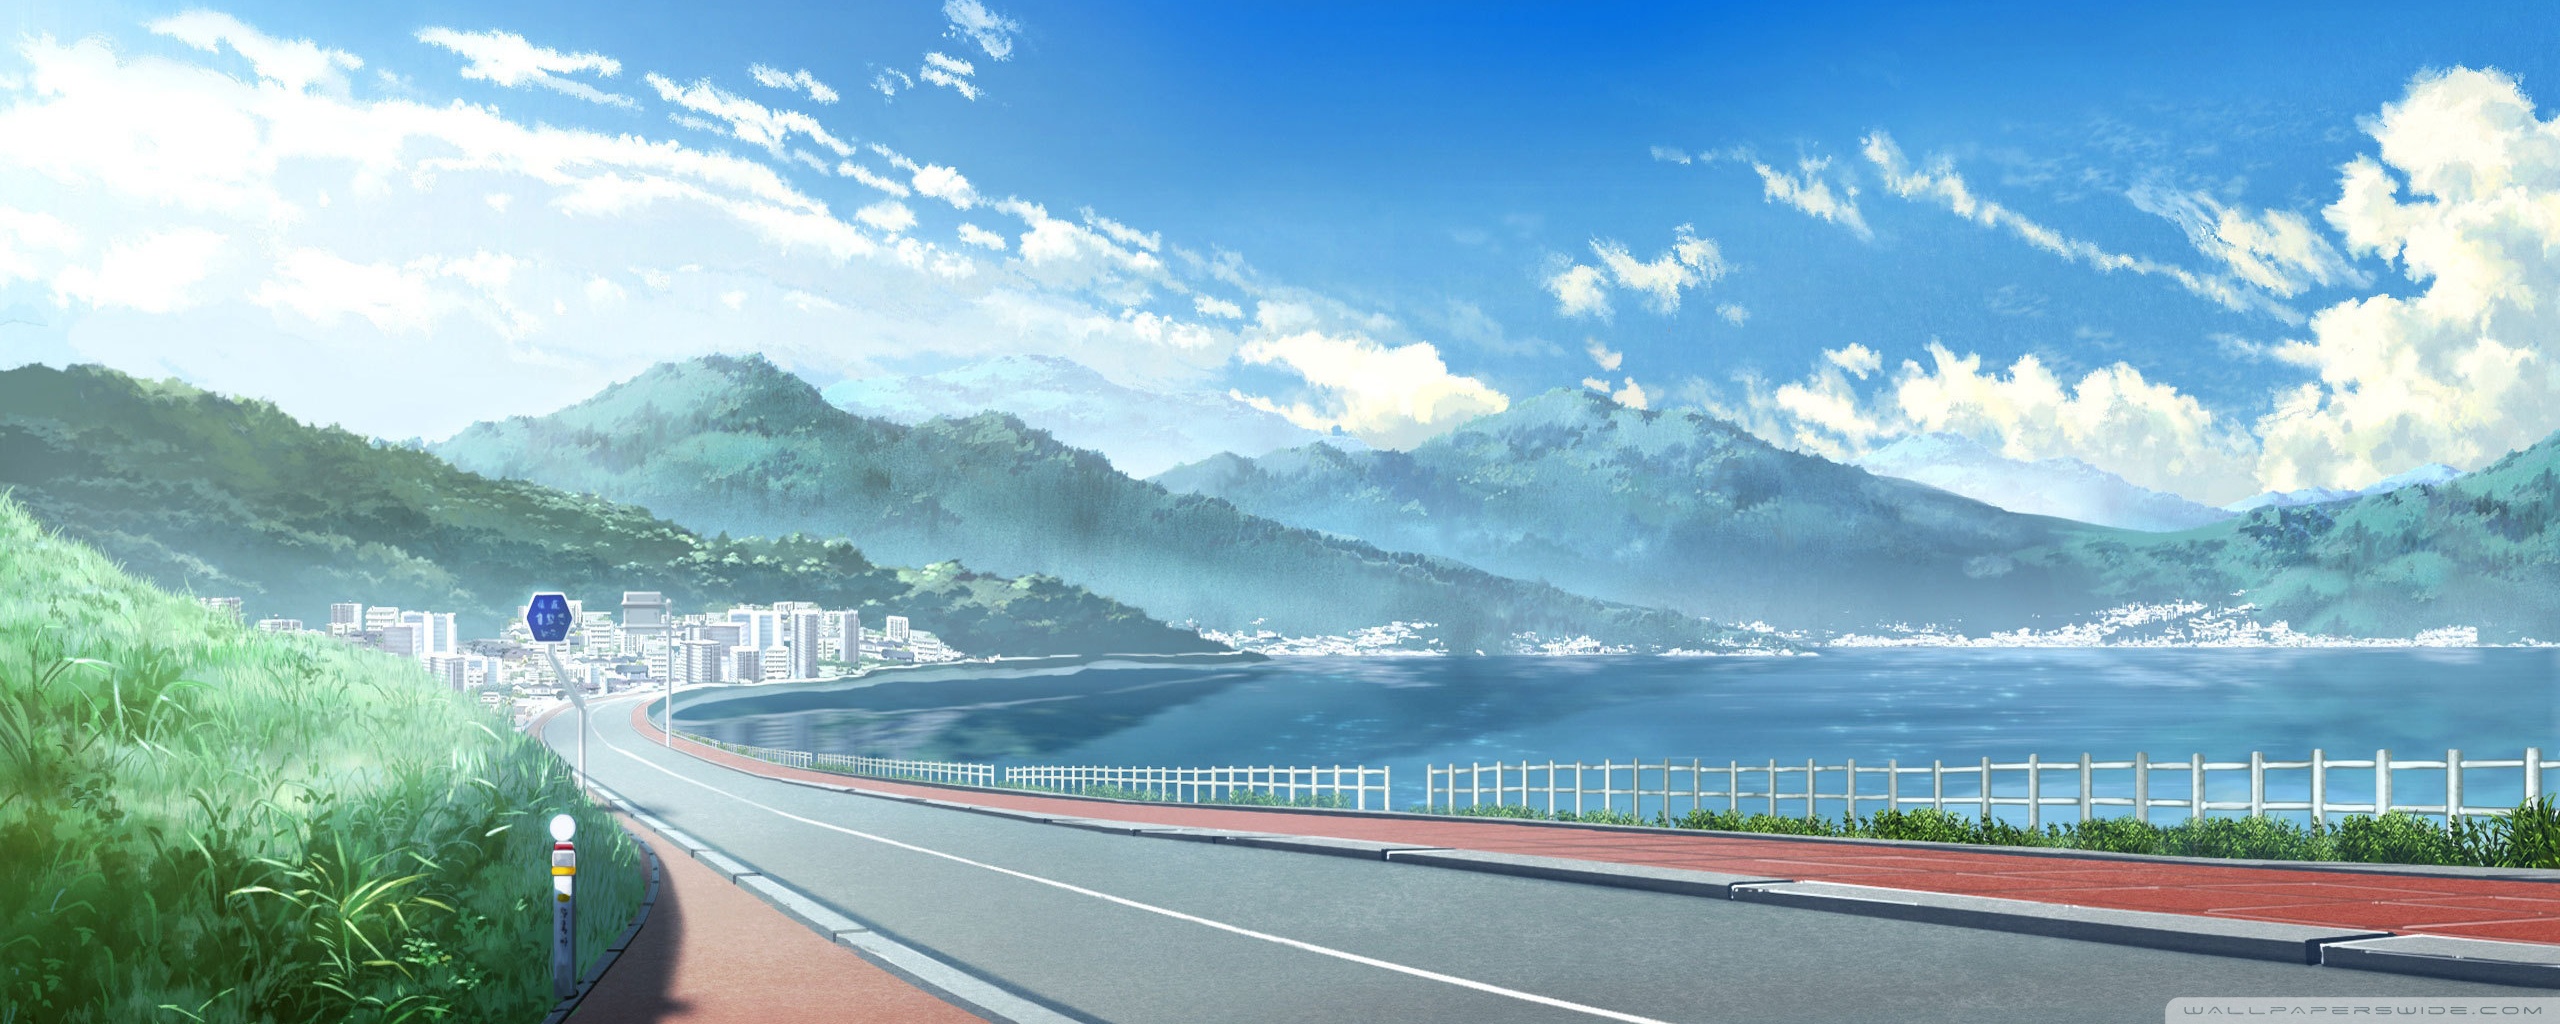 Animes Wallpapers HD, Anime scenery wallpaper, Cool anime wallpapers, Anime  scenery